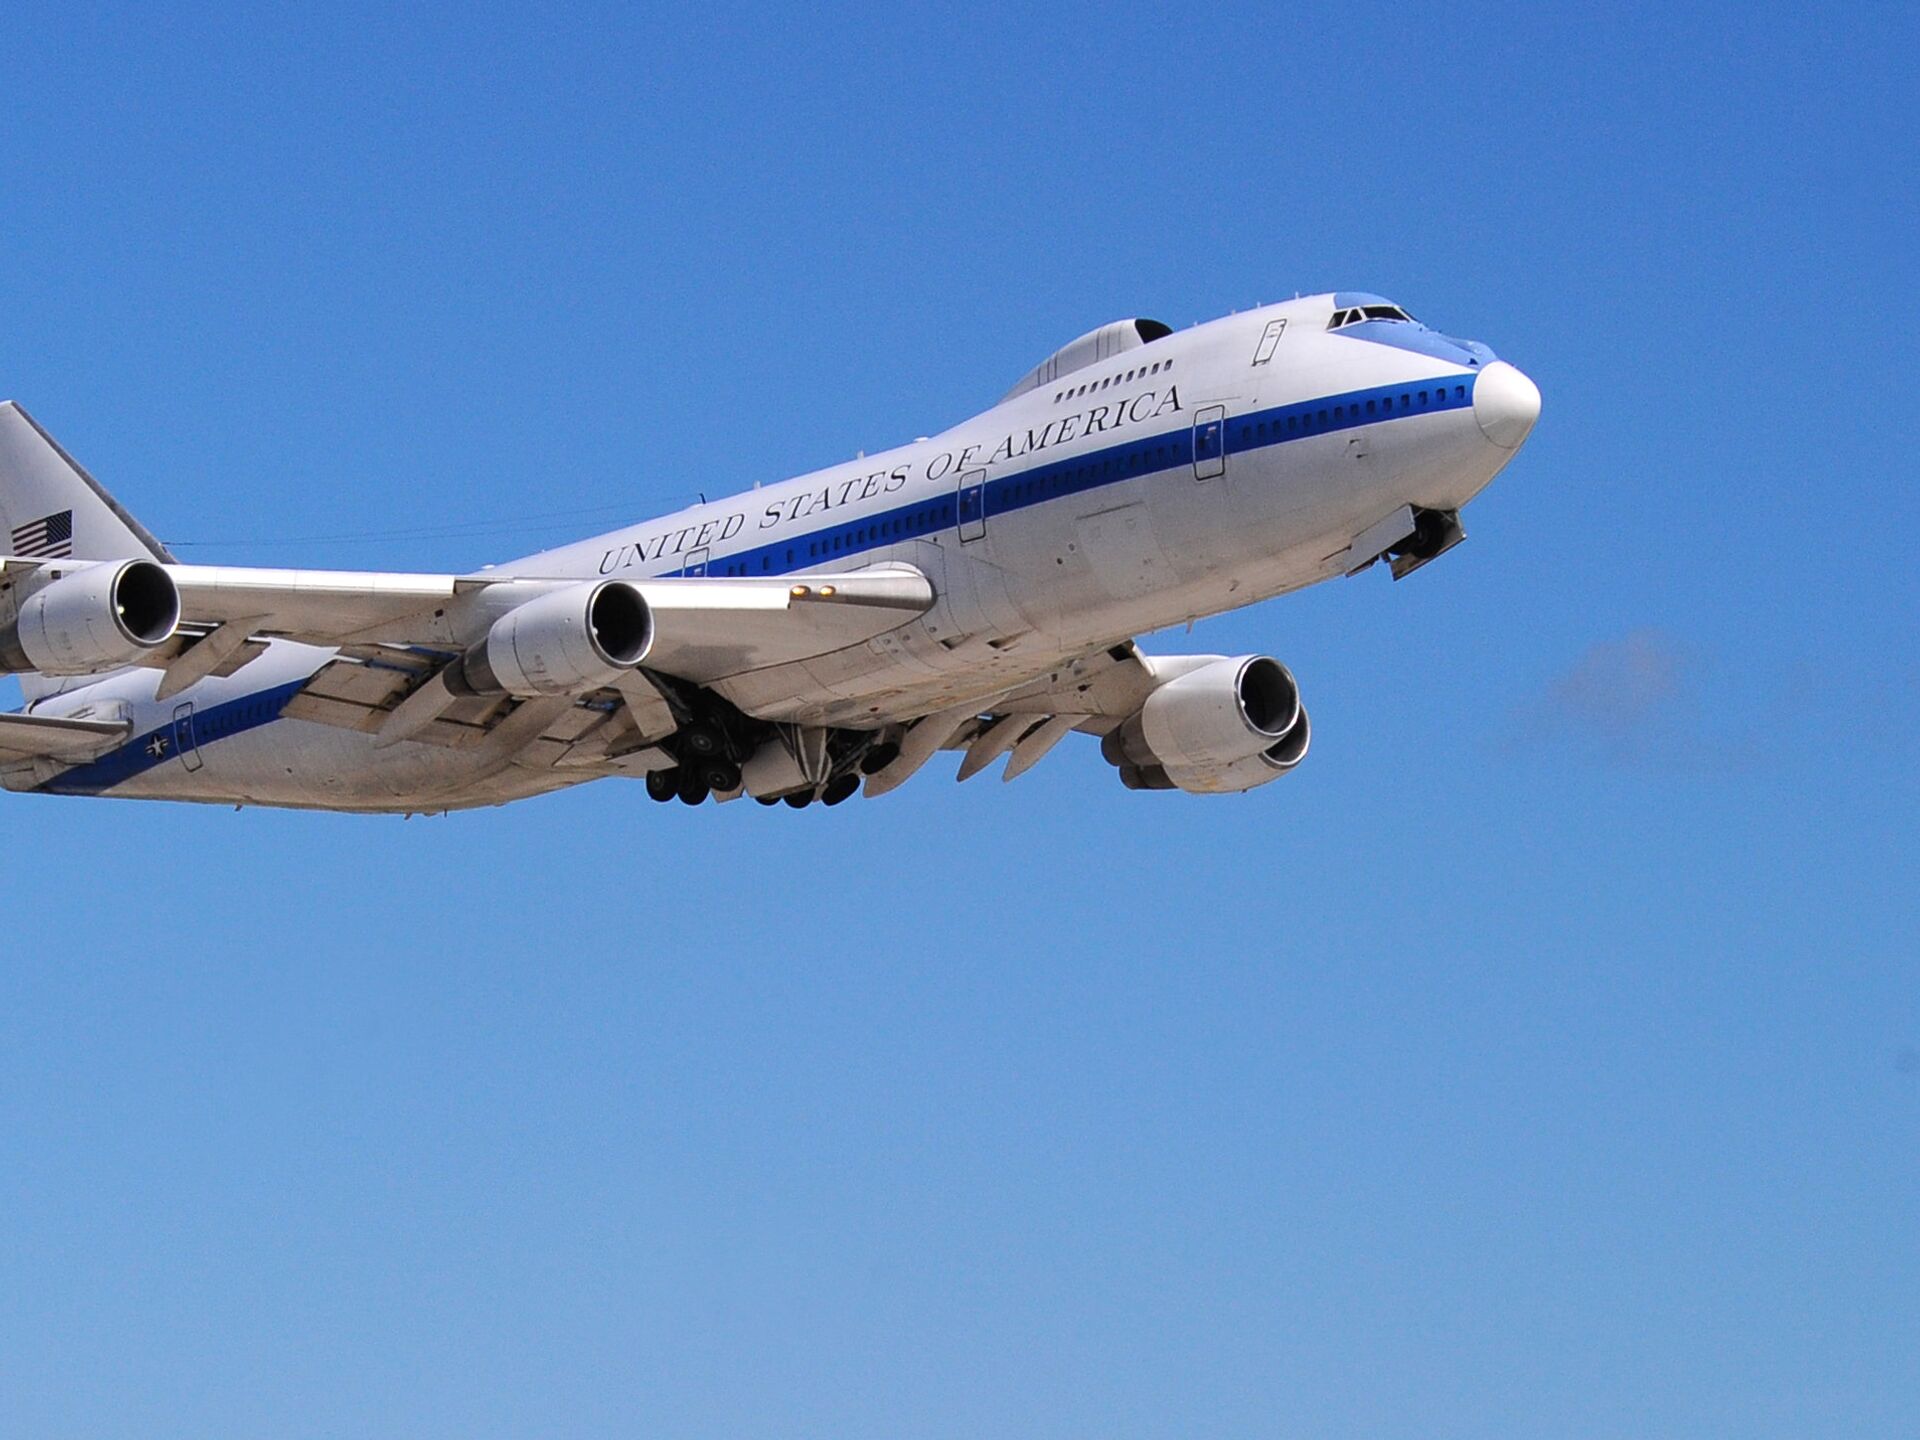 СМИ: Boeing останавливает производство легендарного 747-го лайнера - РИА Новости, 03.07.2020